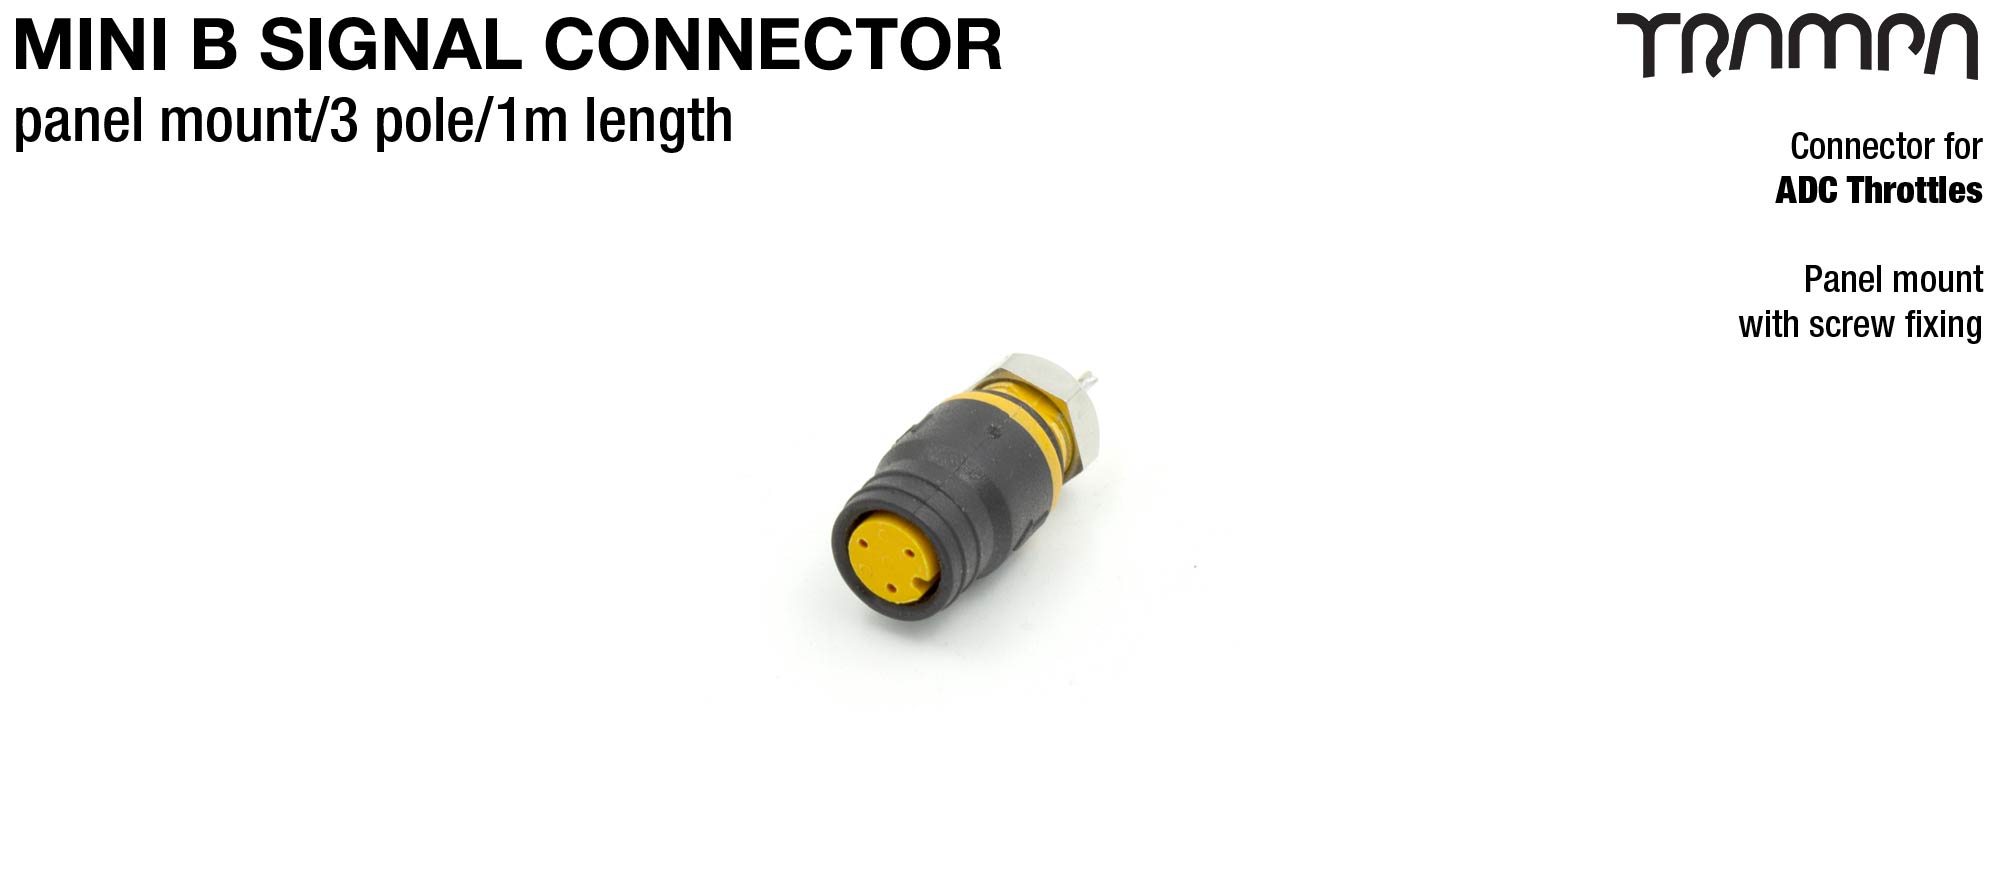 Mini B signal connector - female - panel mount